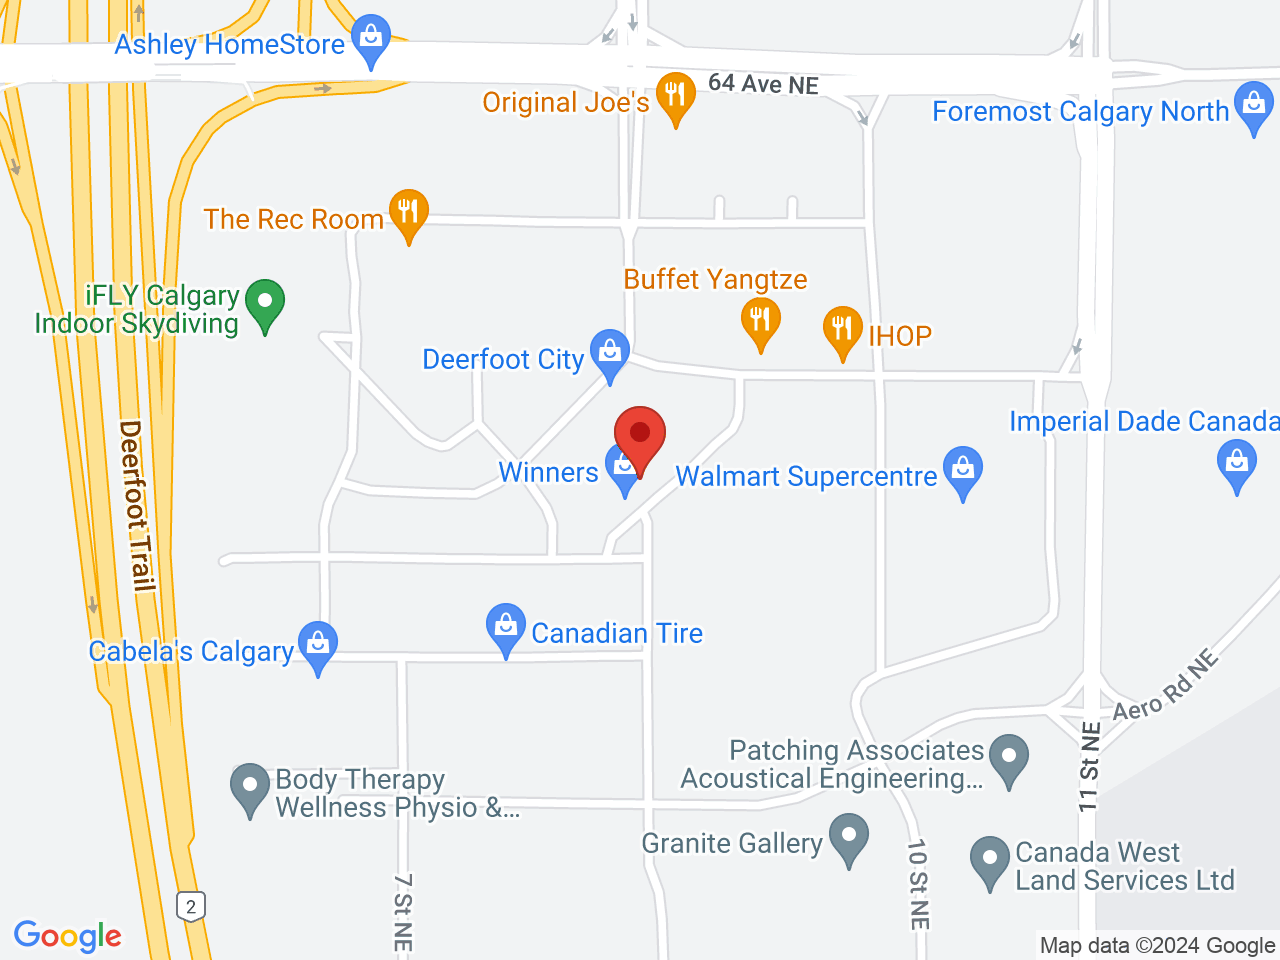 Street map for Value Buds Deerfoot City, 5154, 901 - 64 Ave NE, Calgary AB